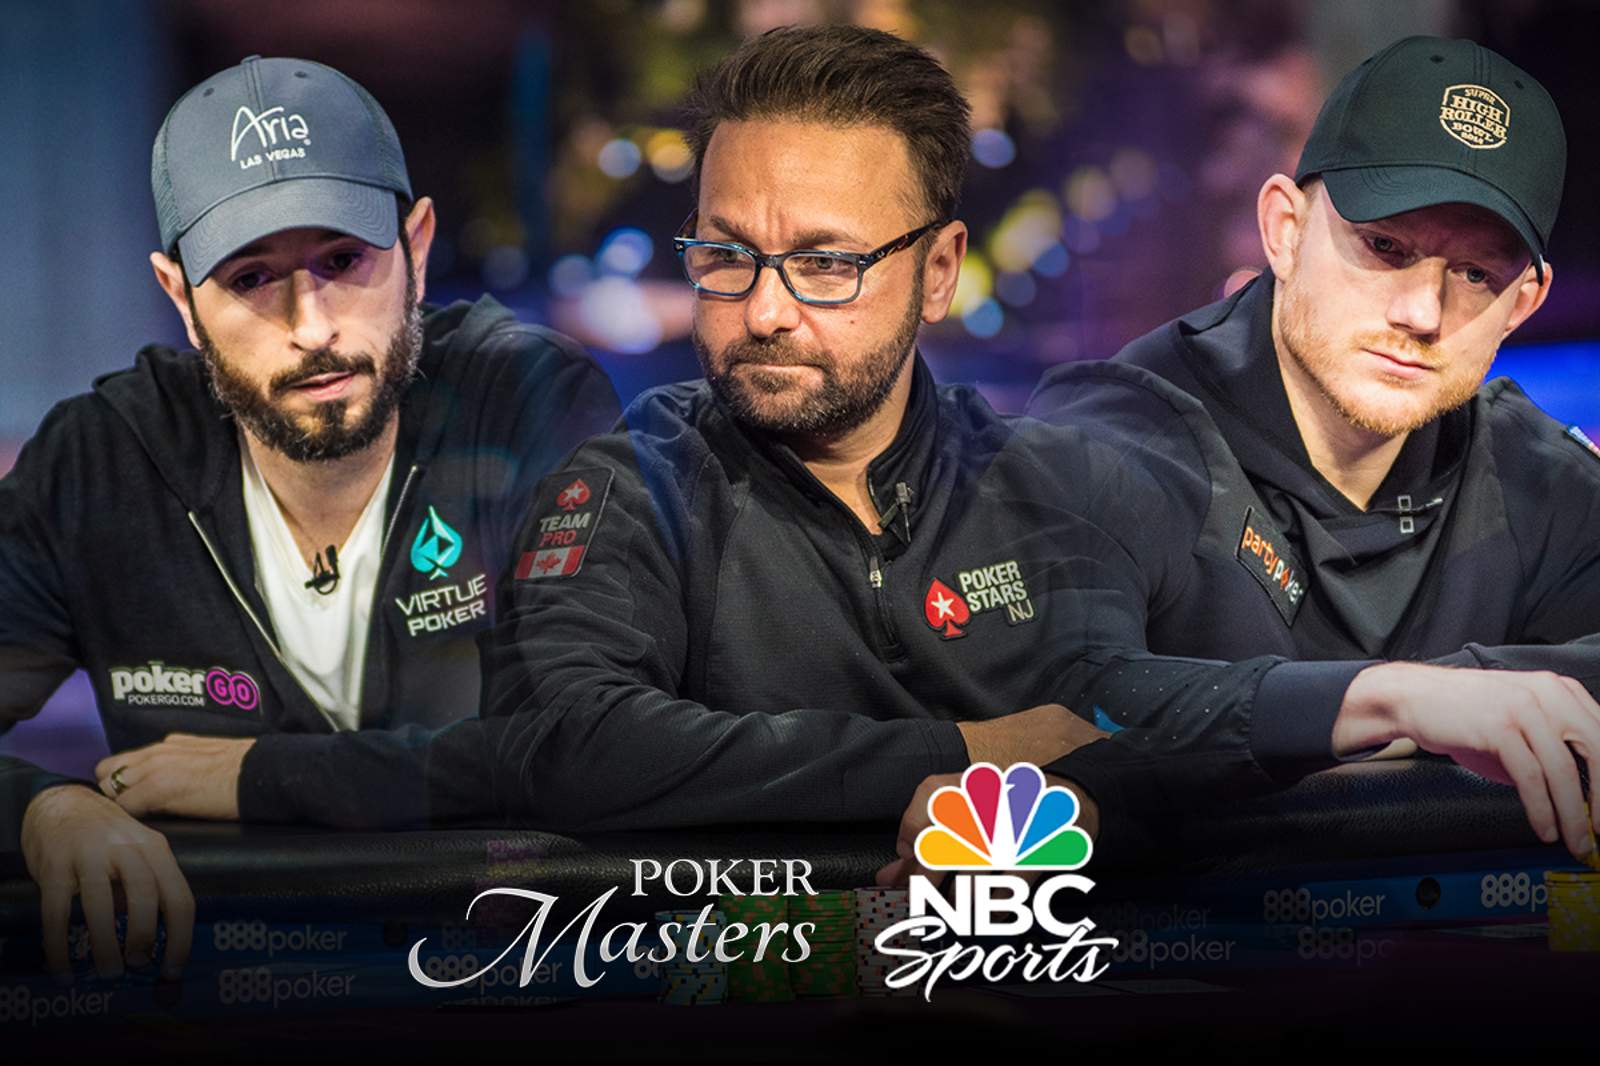 Poker Masters on NBC Sports: Big Names Square Off Tonight